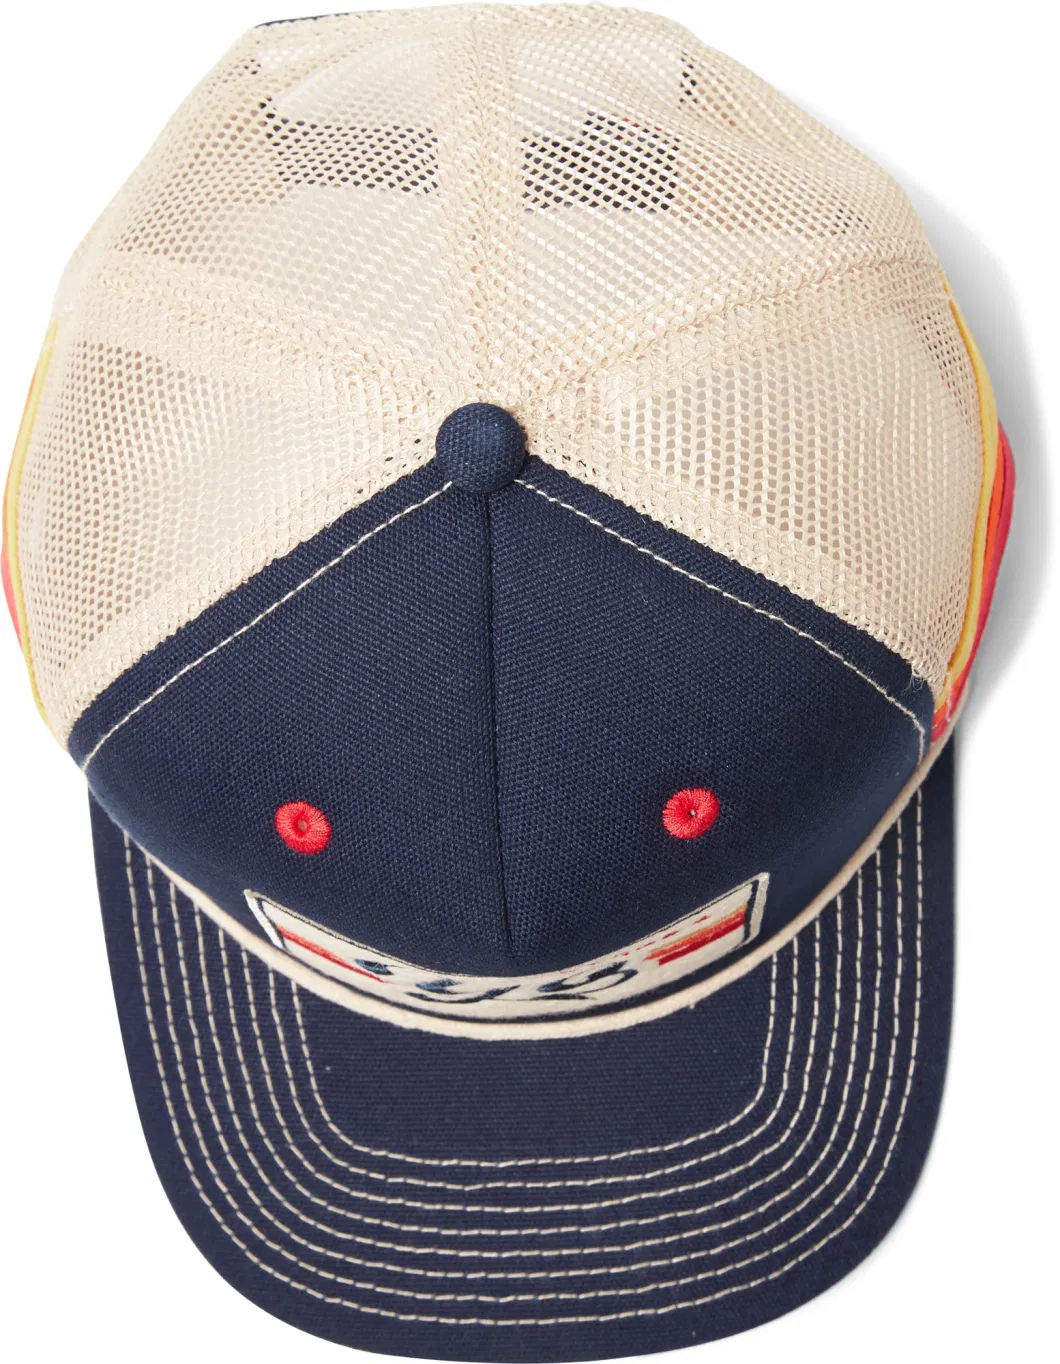 Hats Trucker Manufacturer OEM Rope Trucker Cap Embroidered Logo Custom 5 Panel Mesh Hat 3 Side Stripes Cotton Trucker Hat